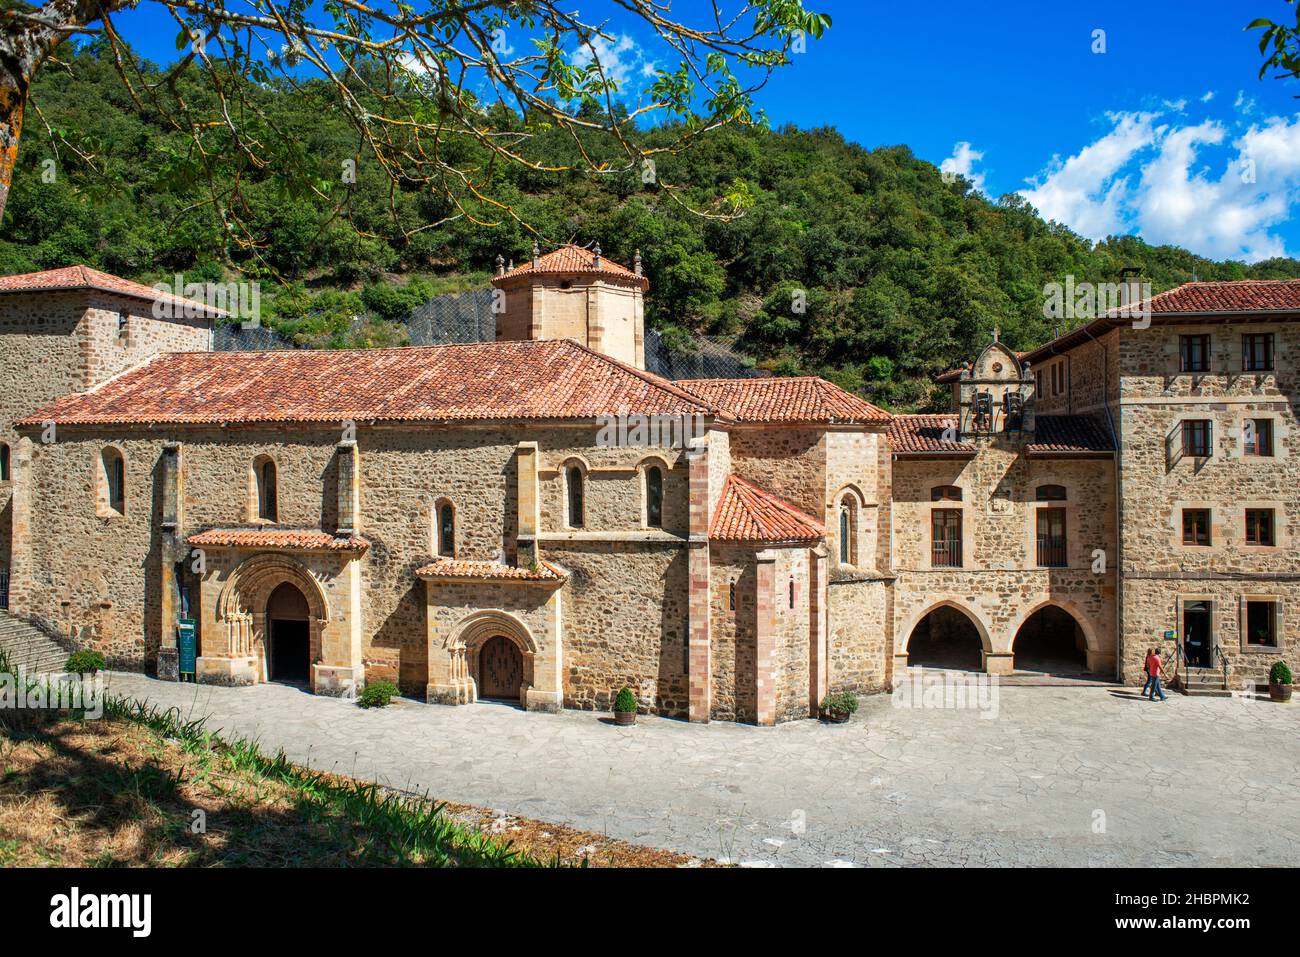 Santo Toribio de Liebana monastery. Liébana region, Picos de Europa, Cantabria Spain, Europe Stock Photo